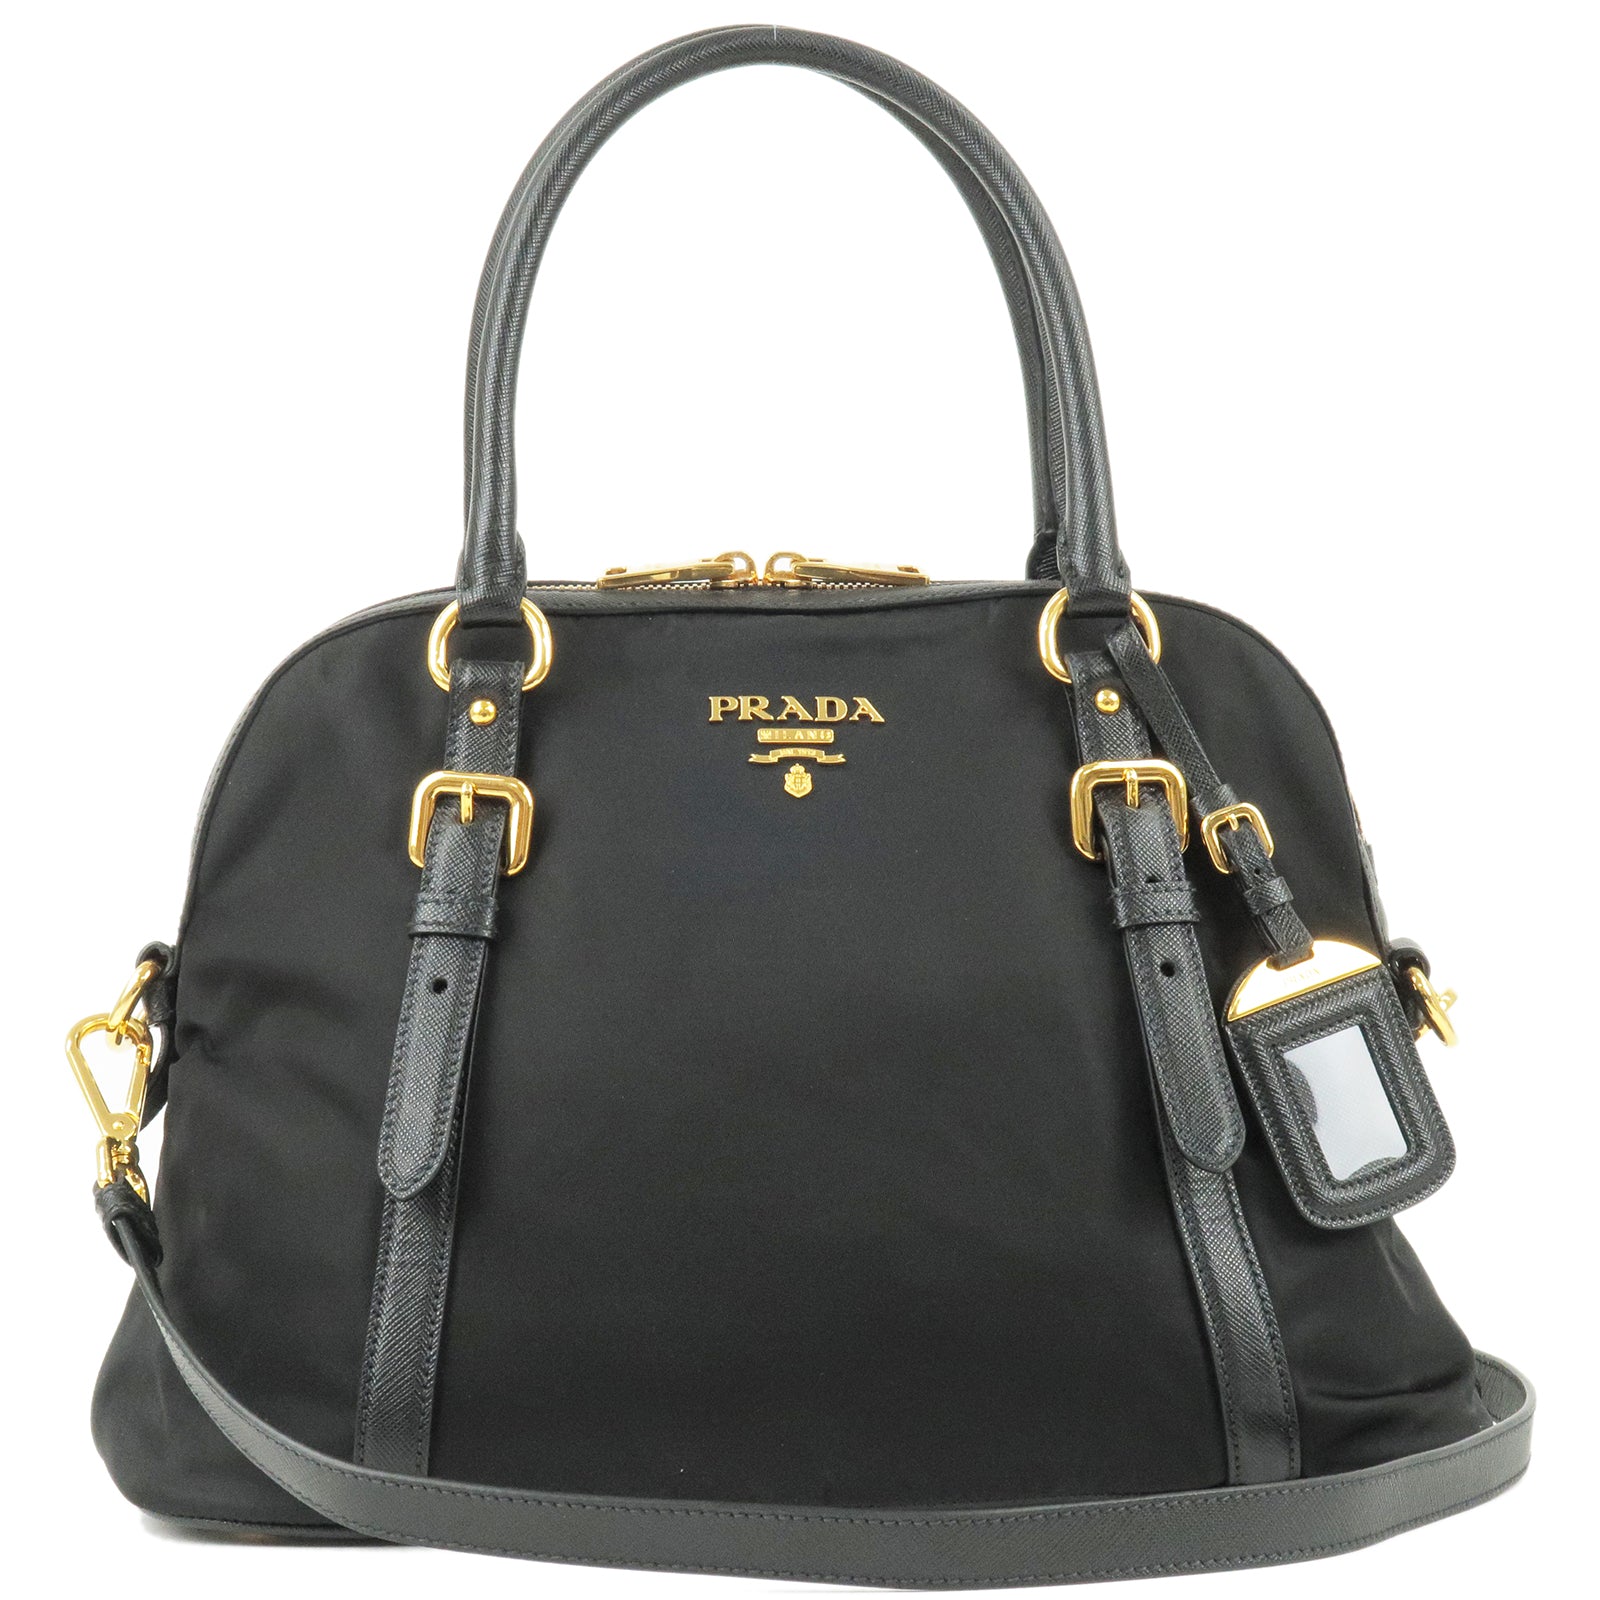 Prada Logo Saffiano Leather Crossbody Bag on SALE